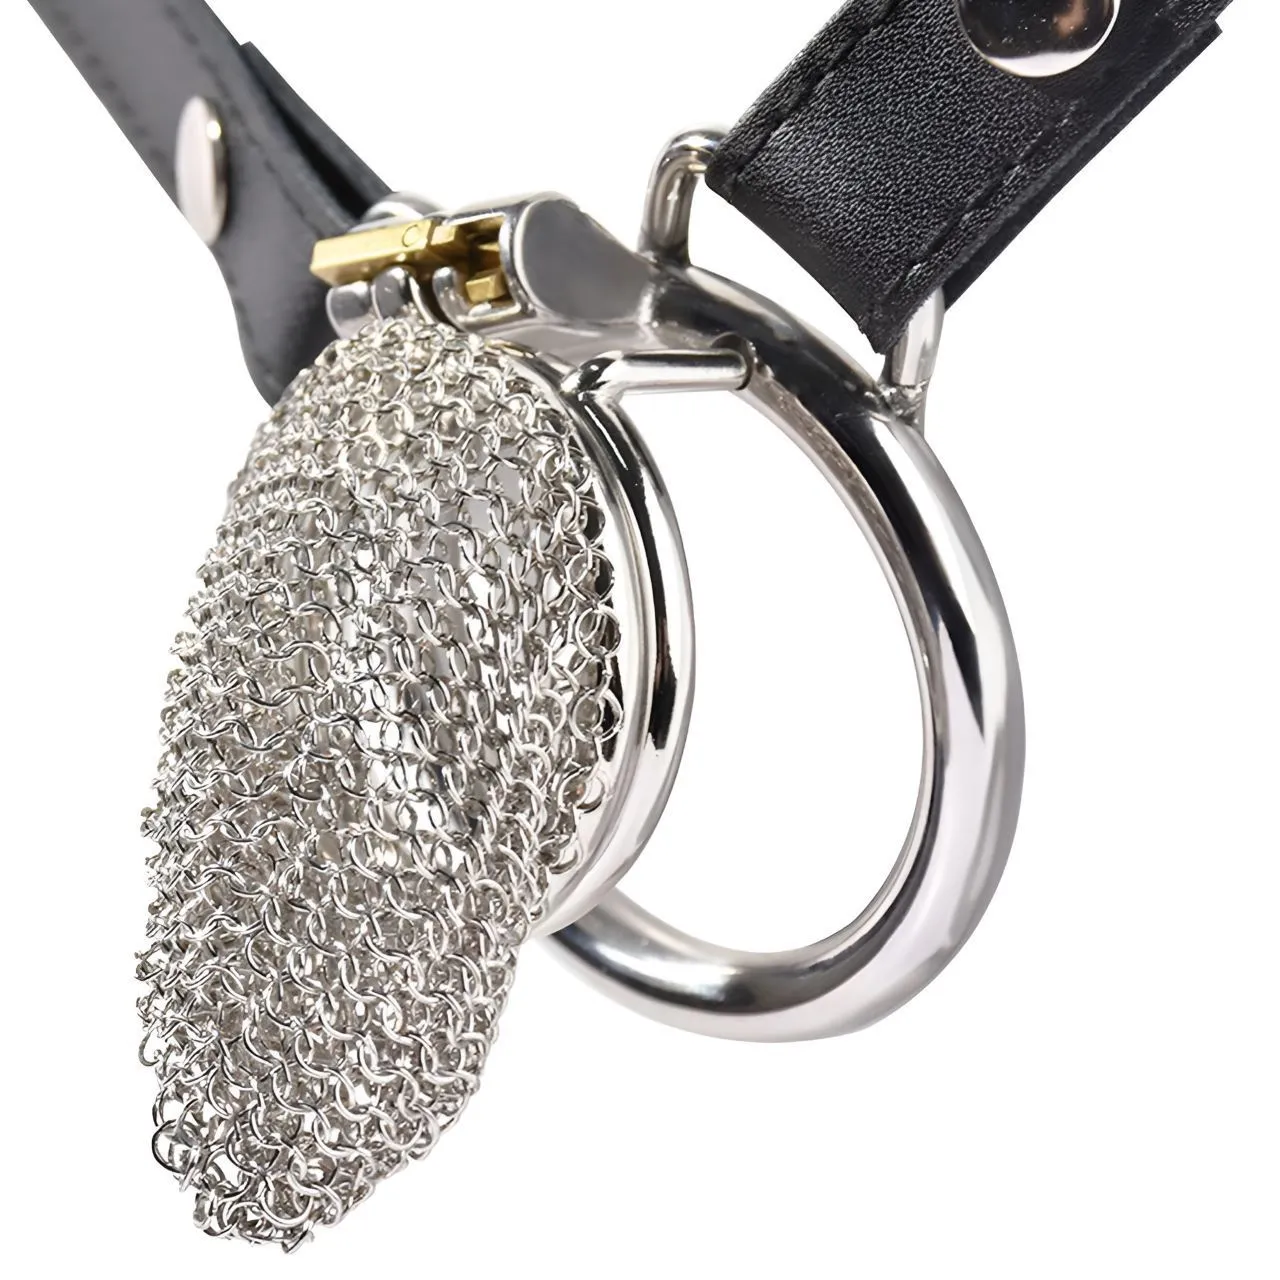 Gauze Chastity Lock Men's Wear Set Chain Metal CB Lock Soft Nail Tight Hole Chastity Lock Sex Products